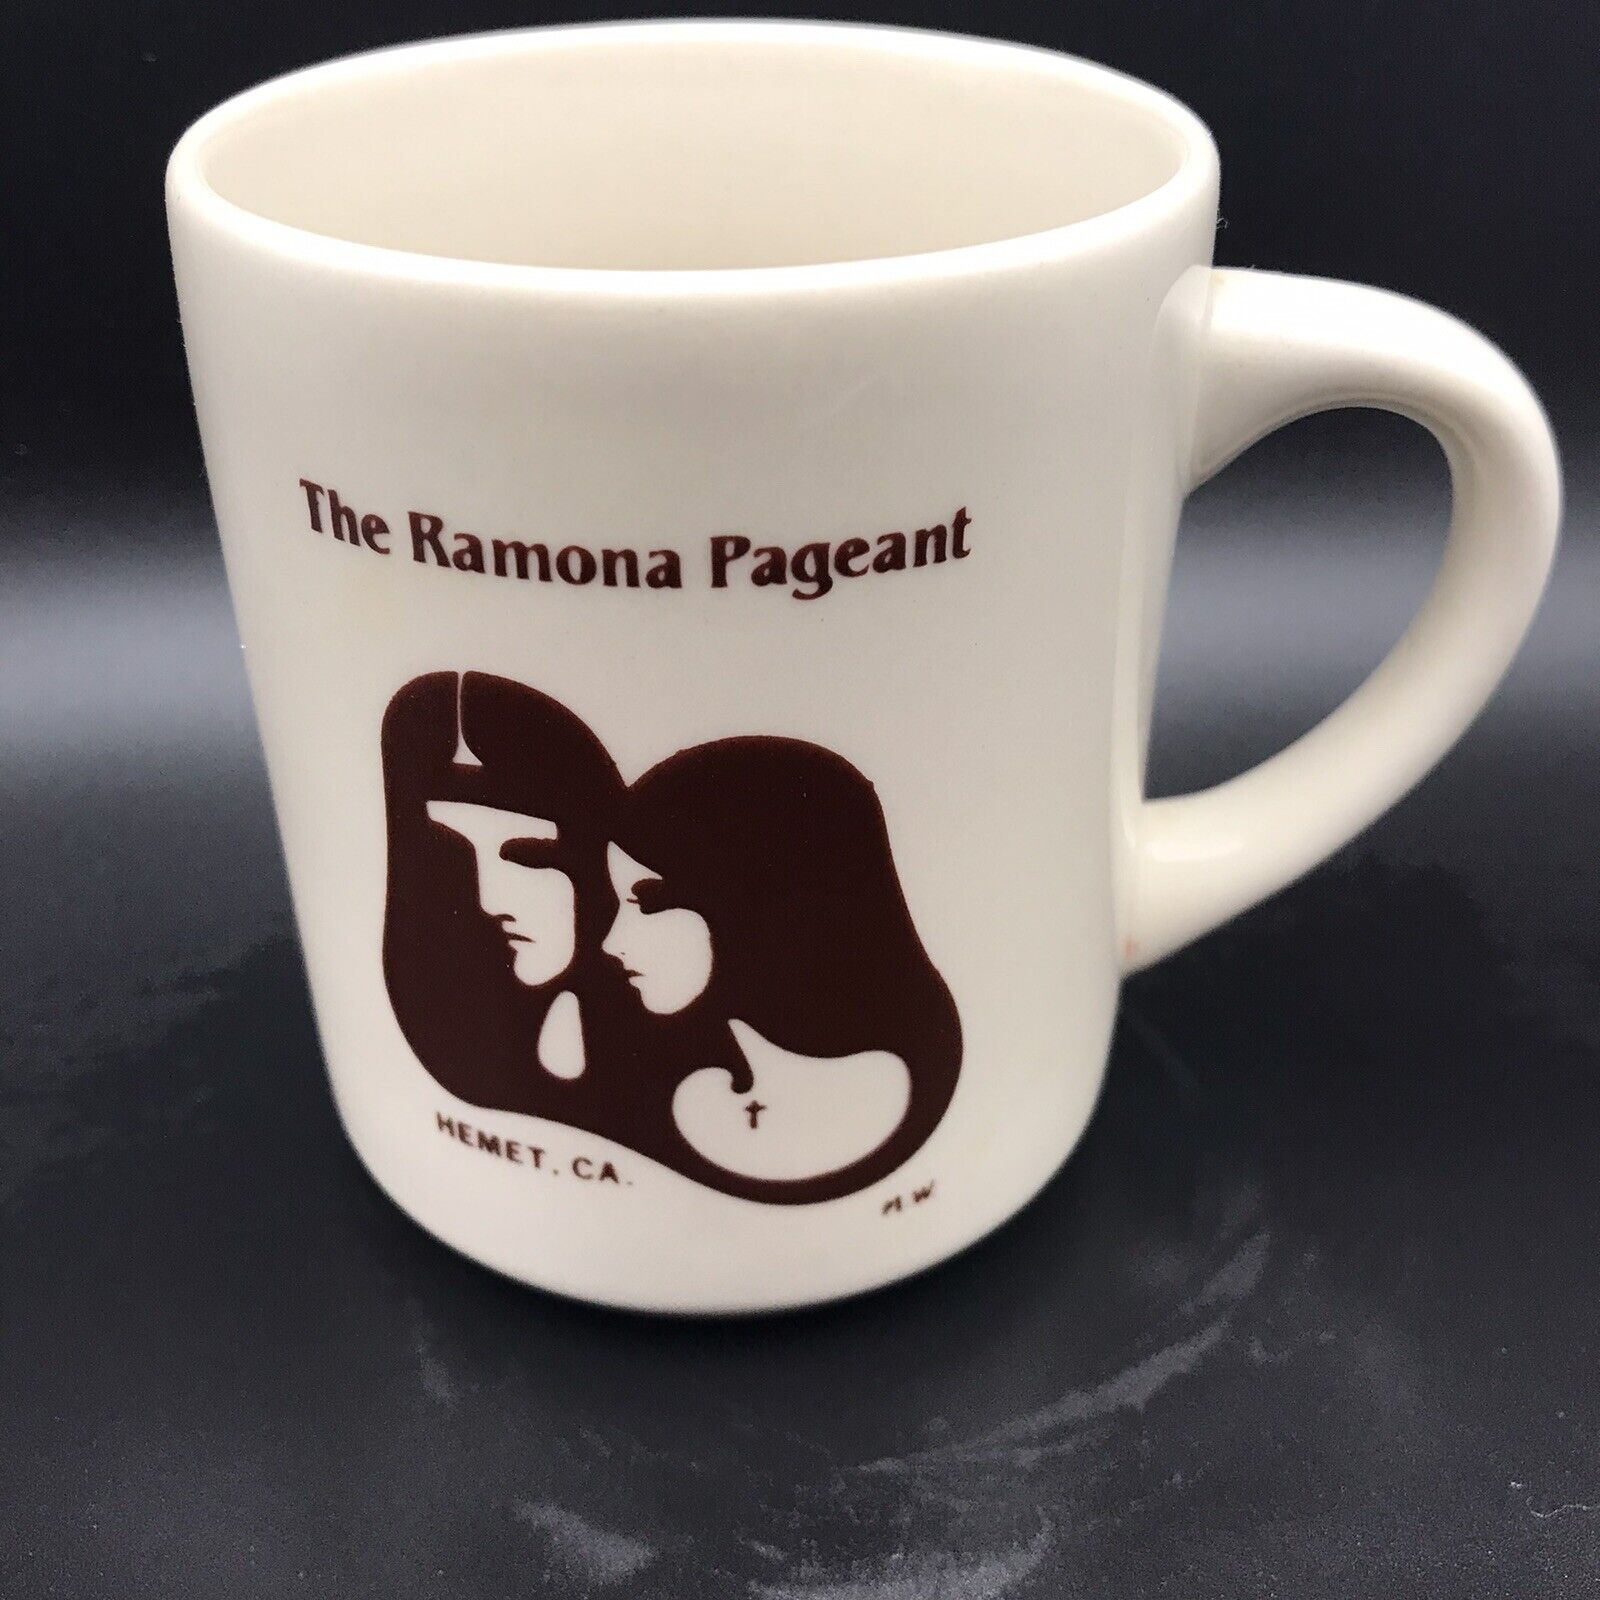 THE RAMONA PAGEANT Hemet California Souvenir Coffee Mug Cup